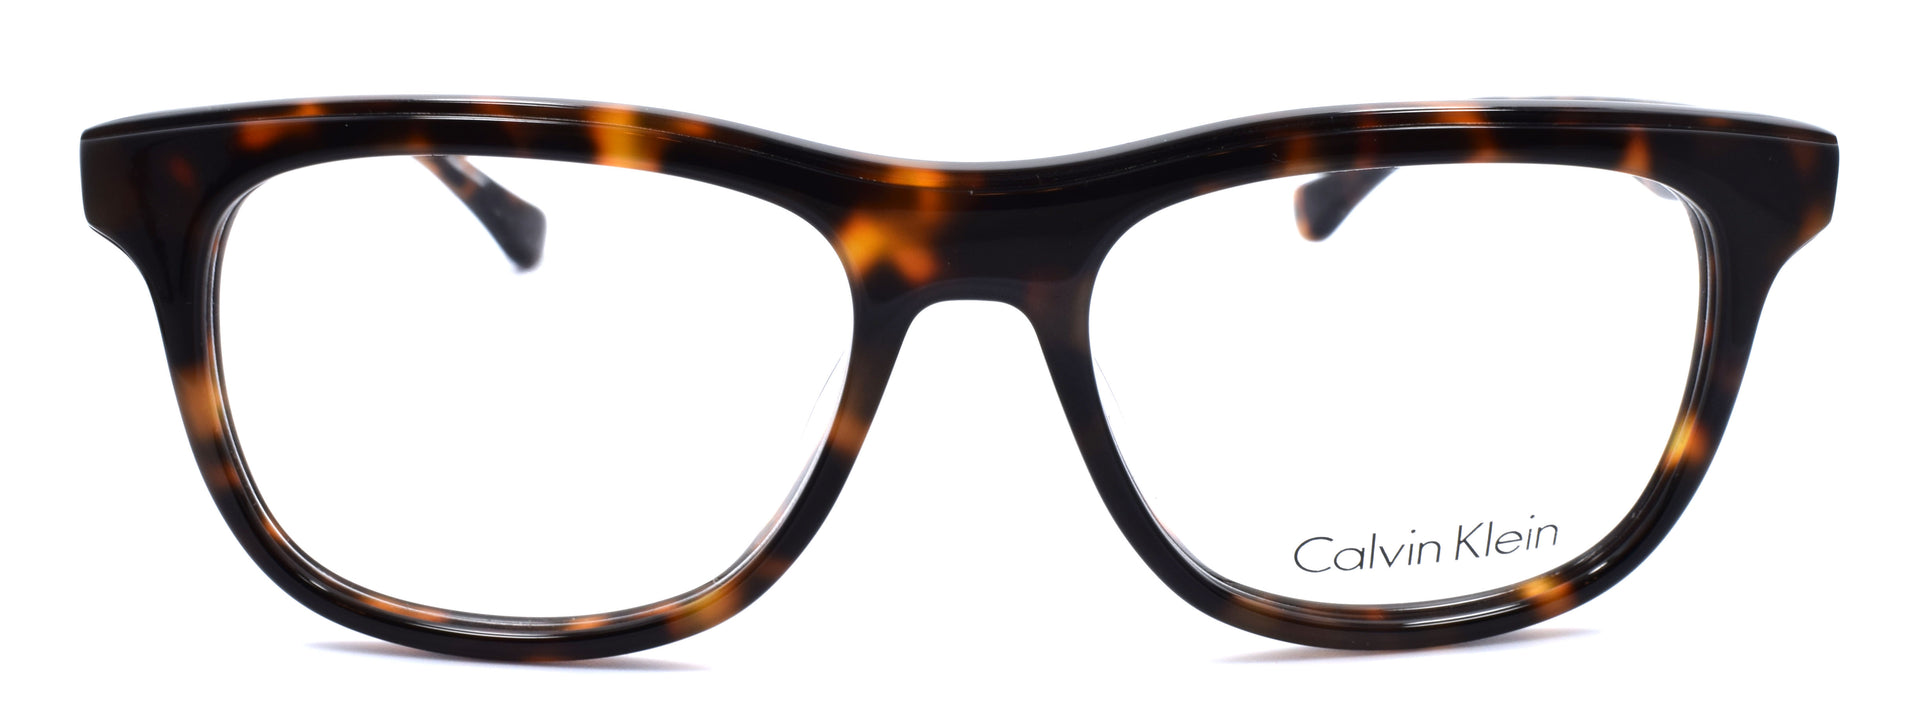 2-Calvin Klein CK5933 214 Unisex Eyeglasses Frames 51-16-140 Brown Tortoise-612608928046-IKSpecs